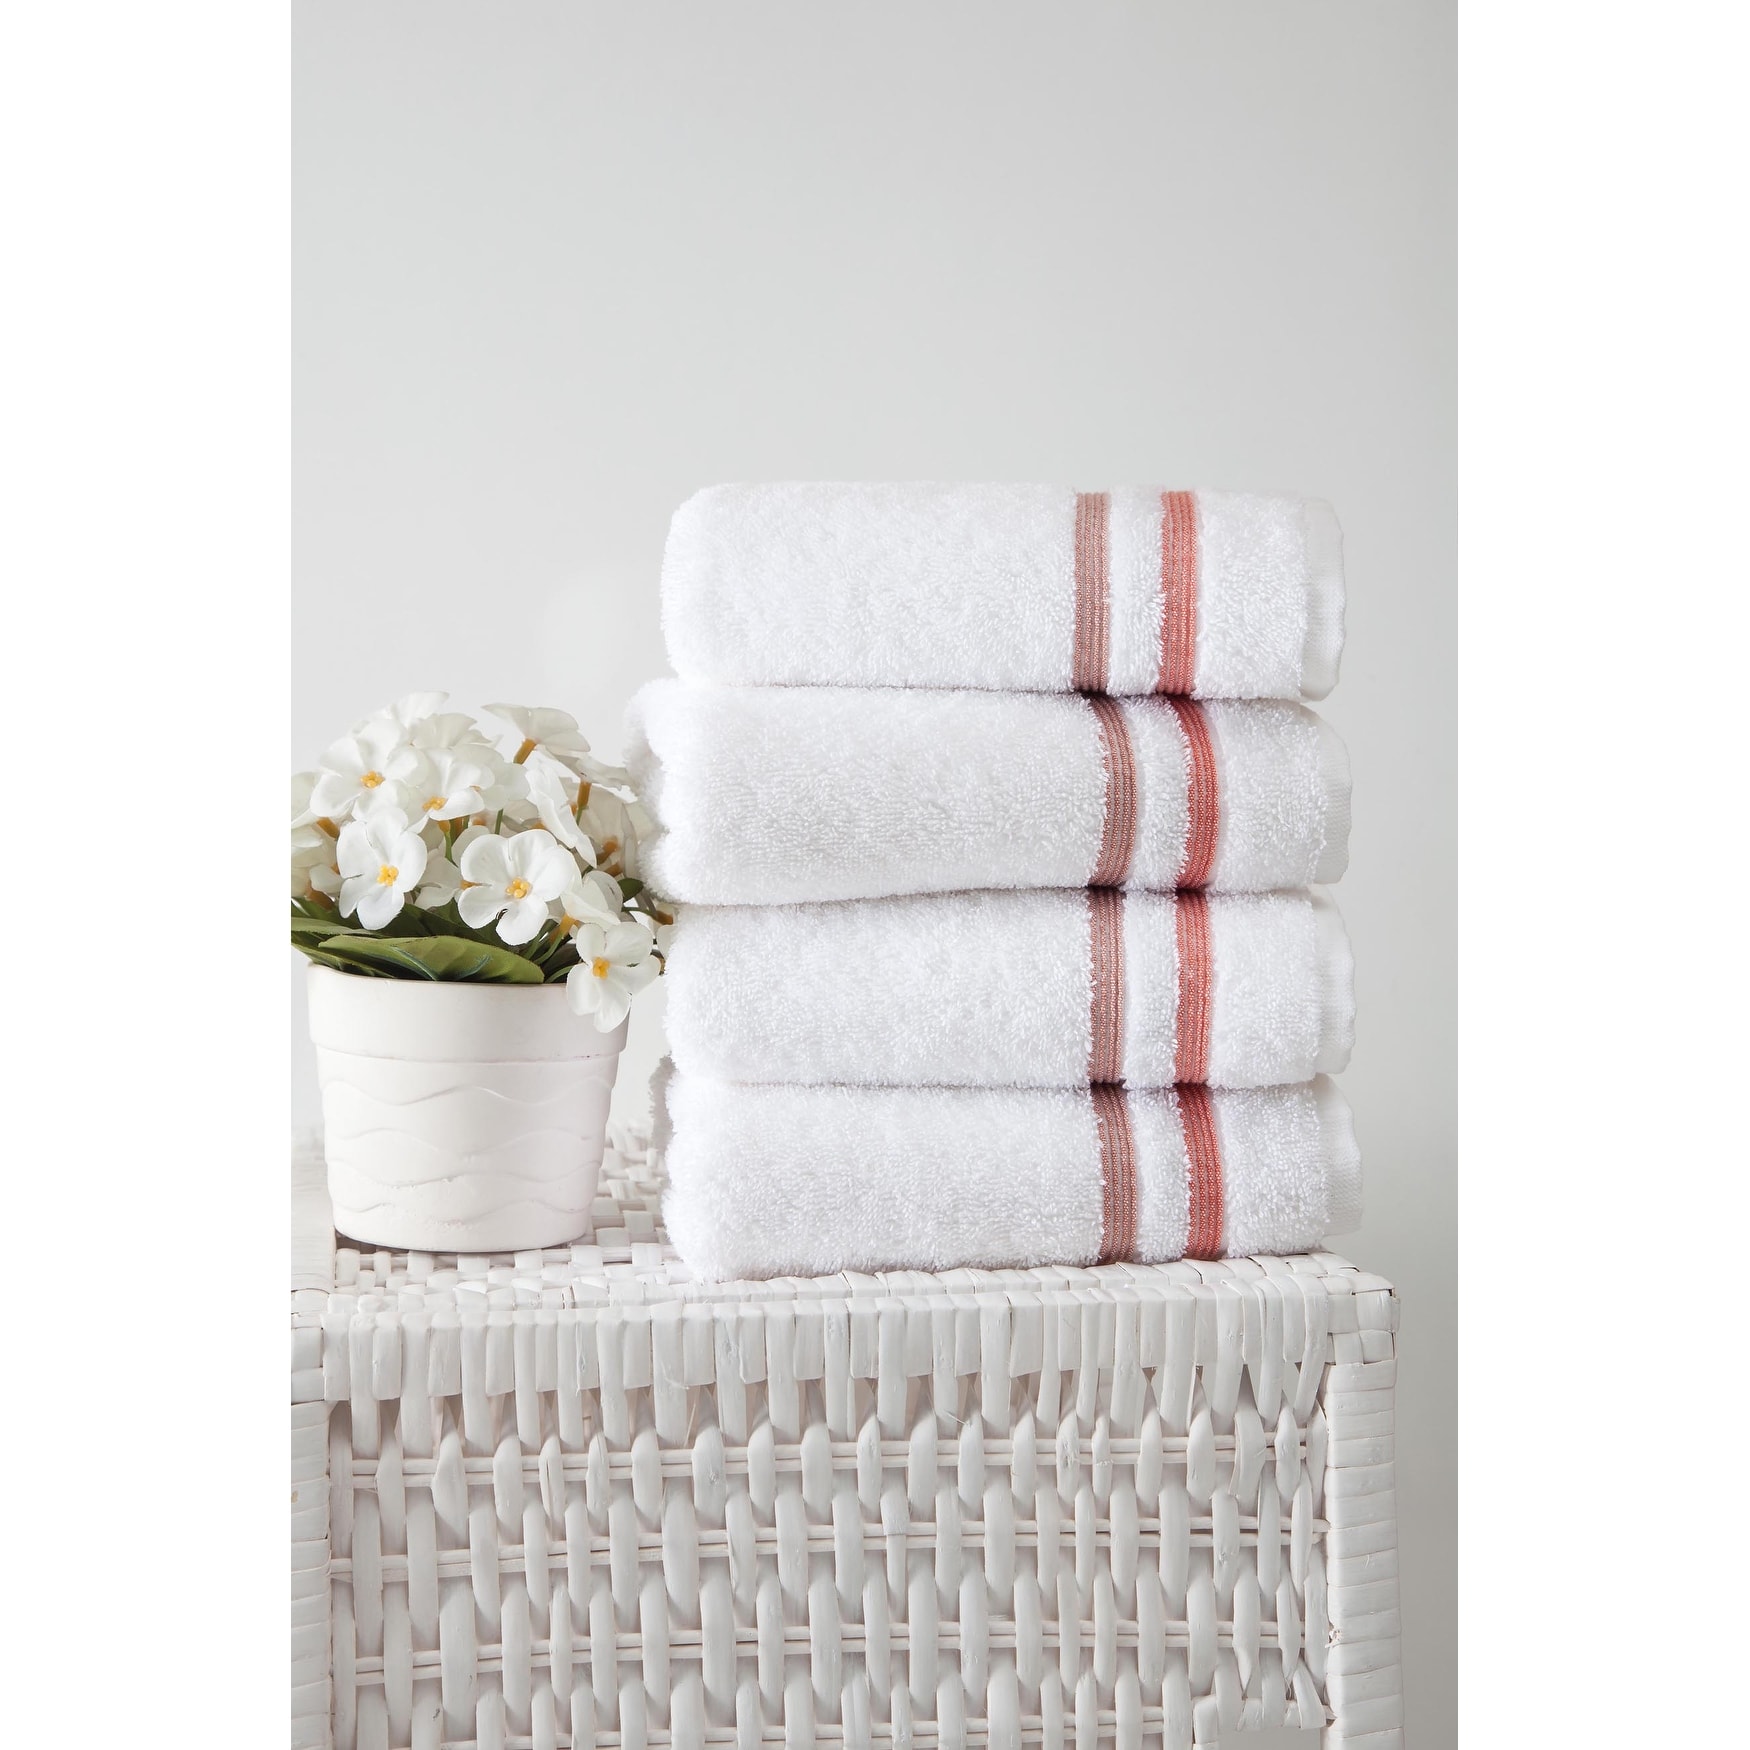 https://ak1.ostkcdn.com/images/products/is/images/direct/4c64c527b23552334ec231daaabdb7bc50e386b0/Ozan-Premium-Home-100%25-Genuine-Turkish-Cotton-Bedazzle-Hand-Towel%28Set-of-4%29.jpg